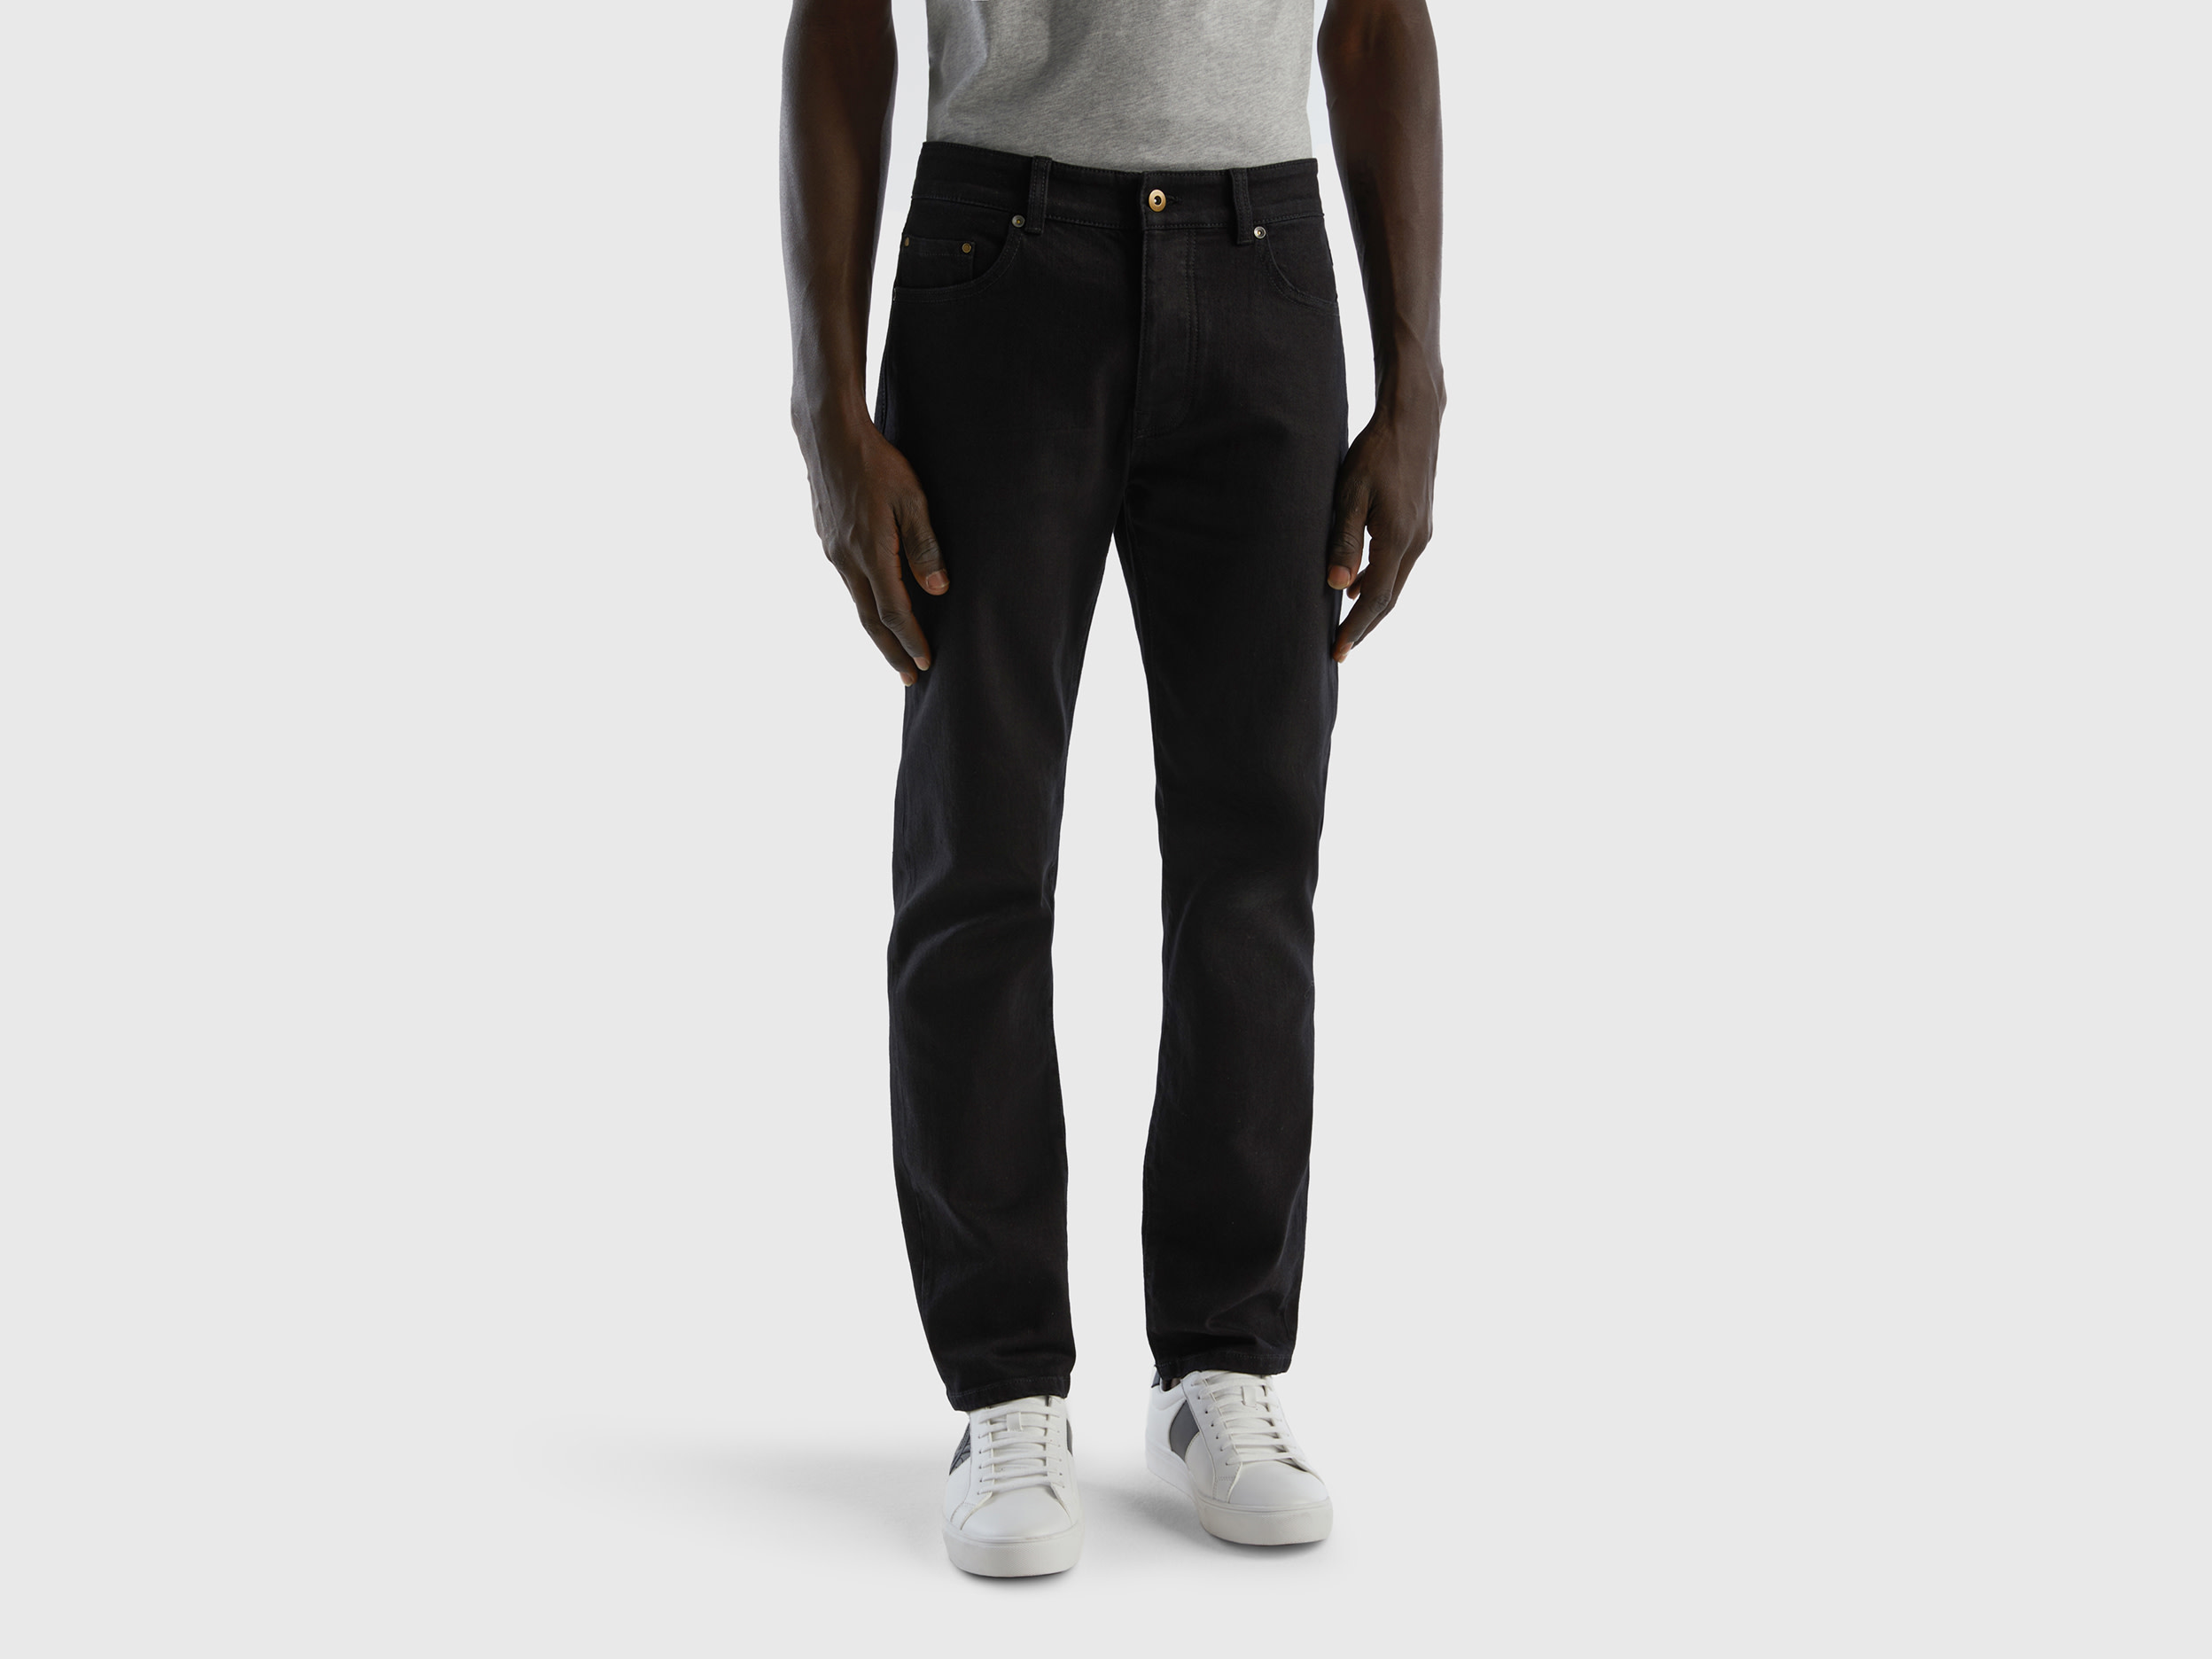 Benetton, Five Pocket Slim Fit Jeans, size 31, Black, Men